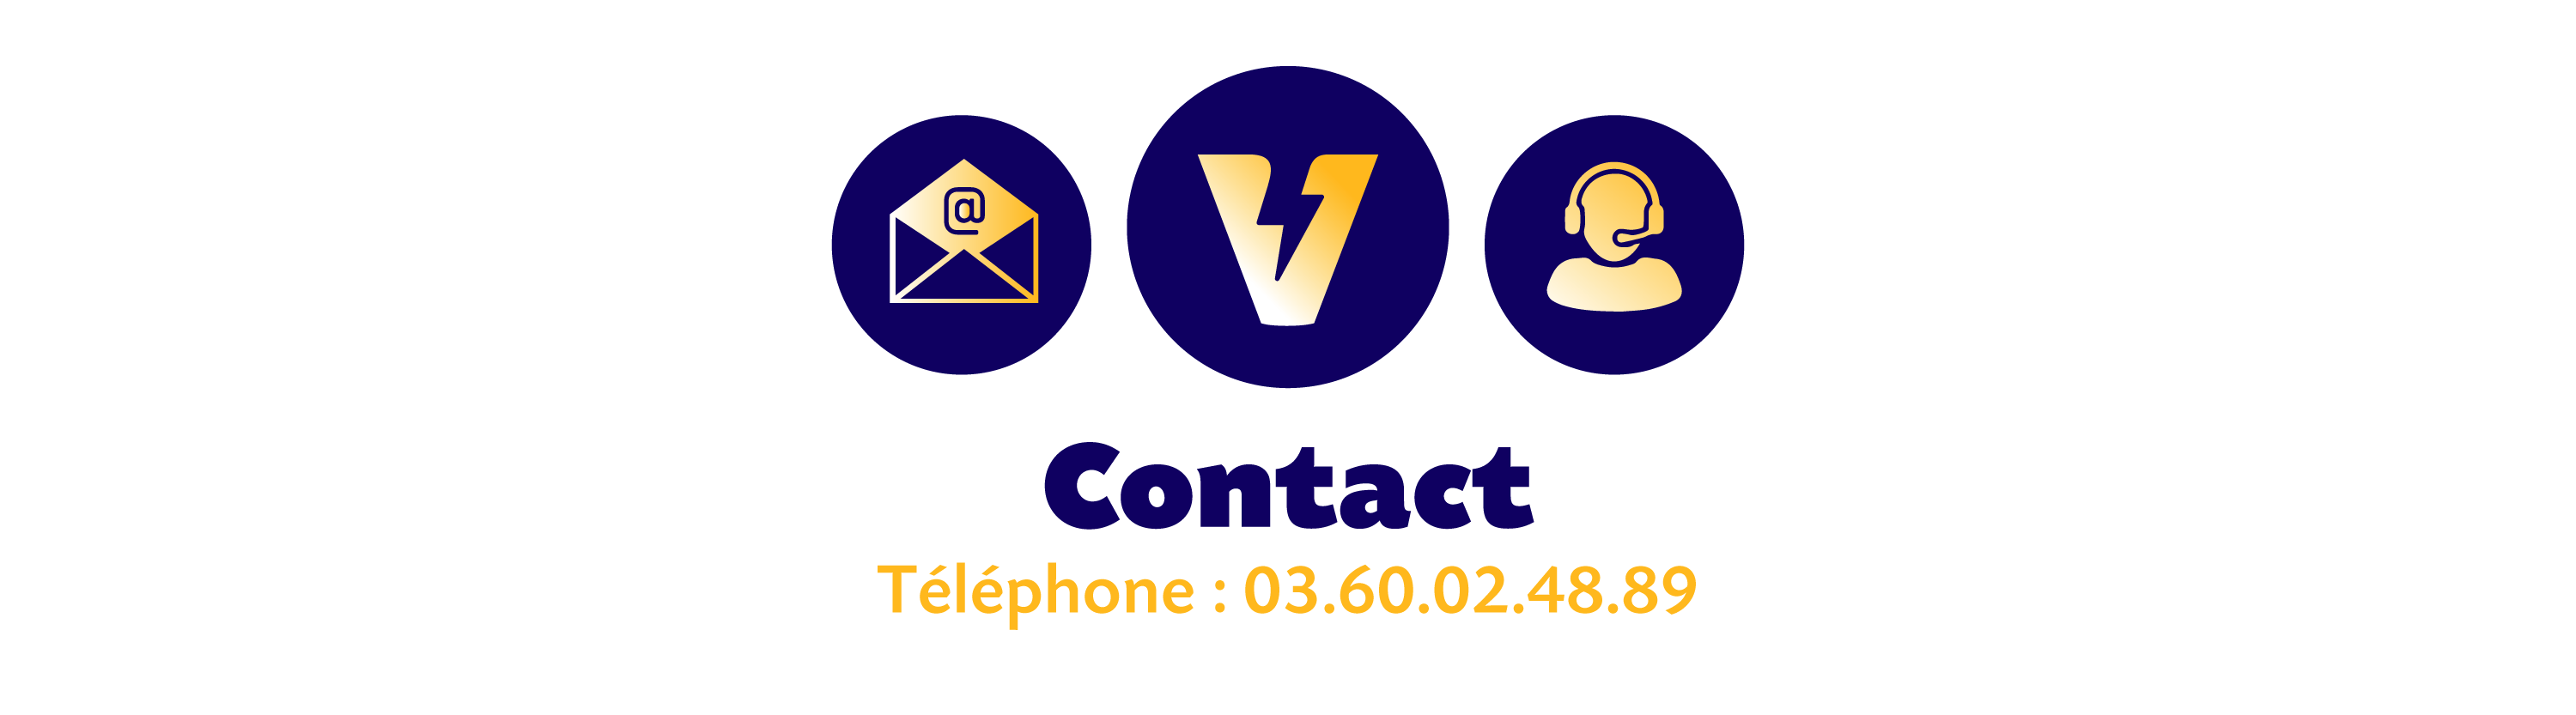 Contact - Téléphone : 03.60.02.48.89